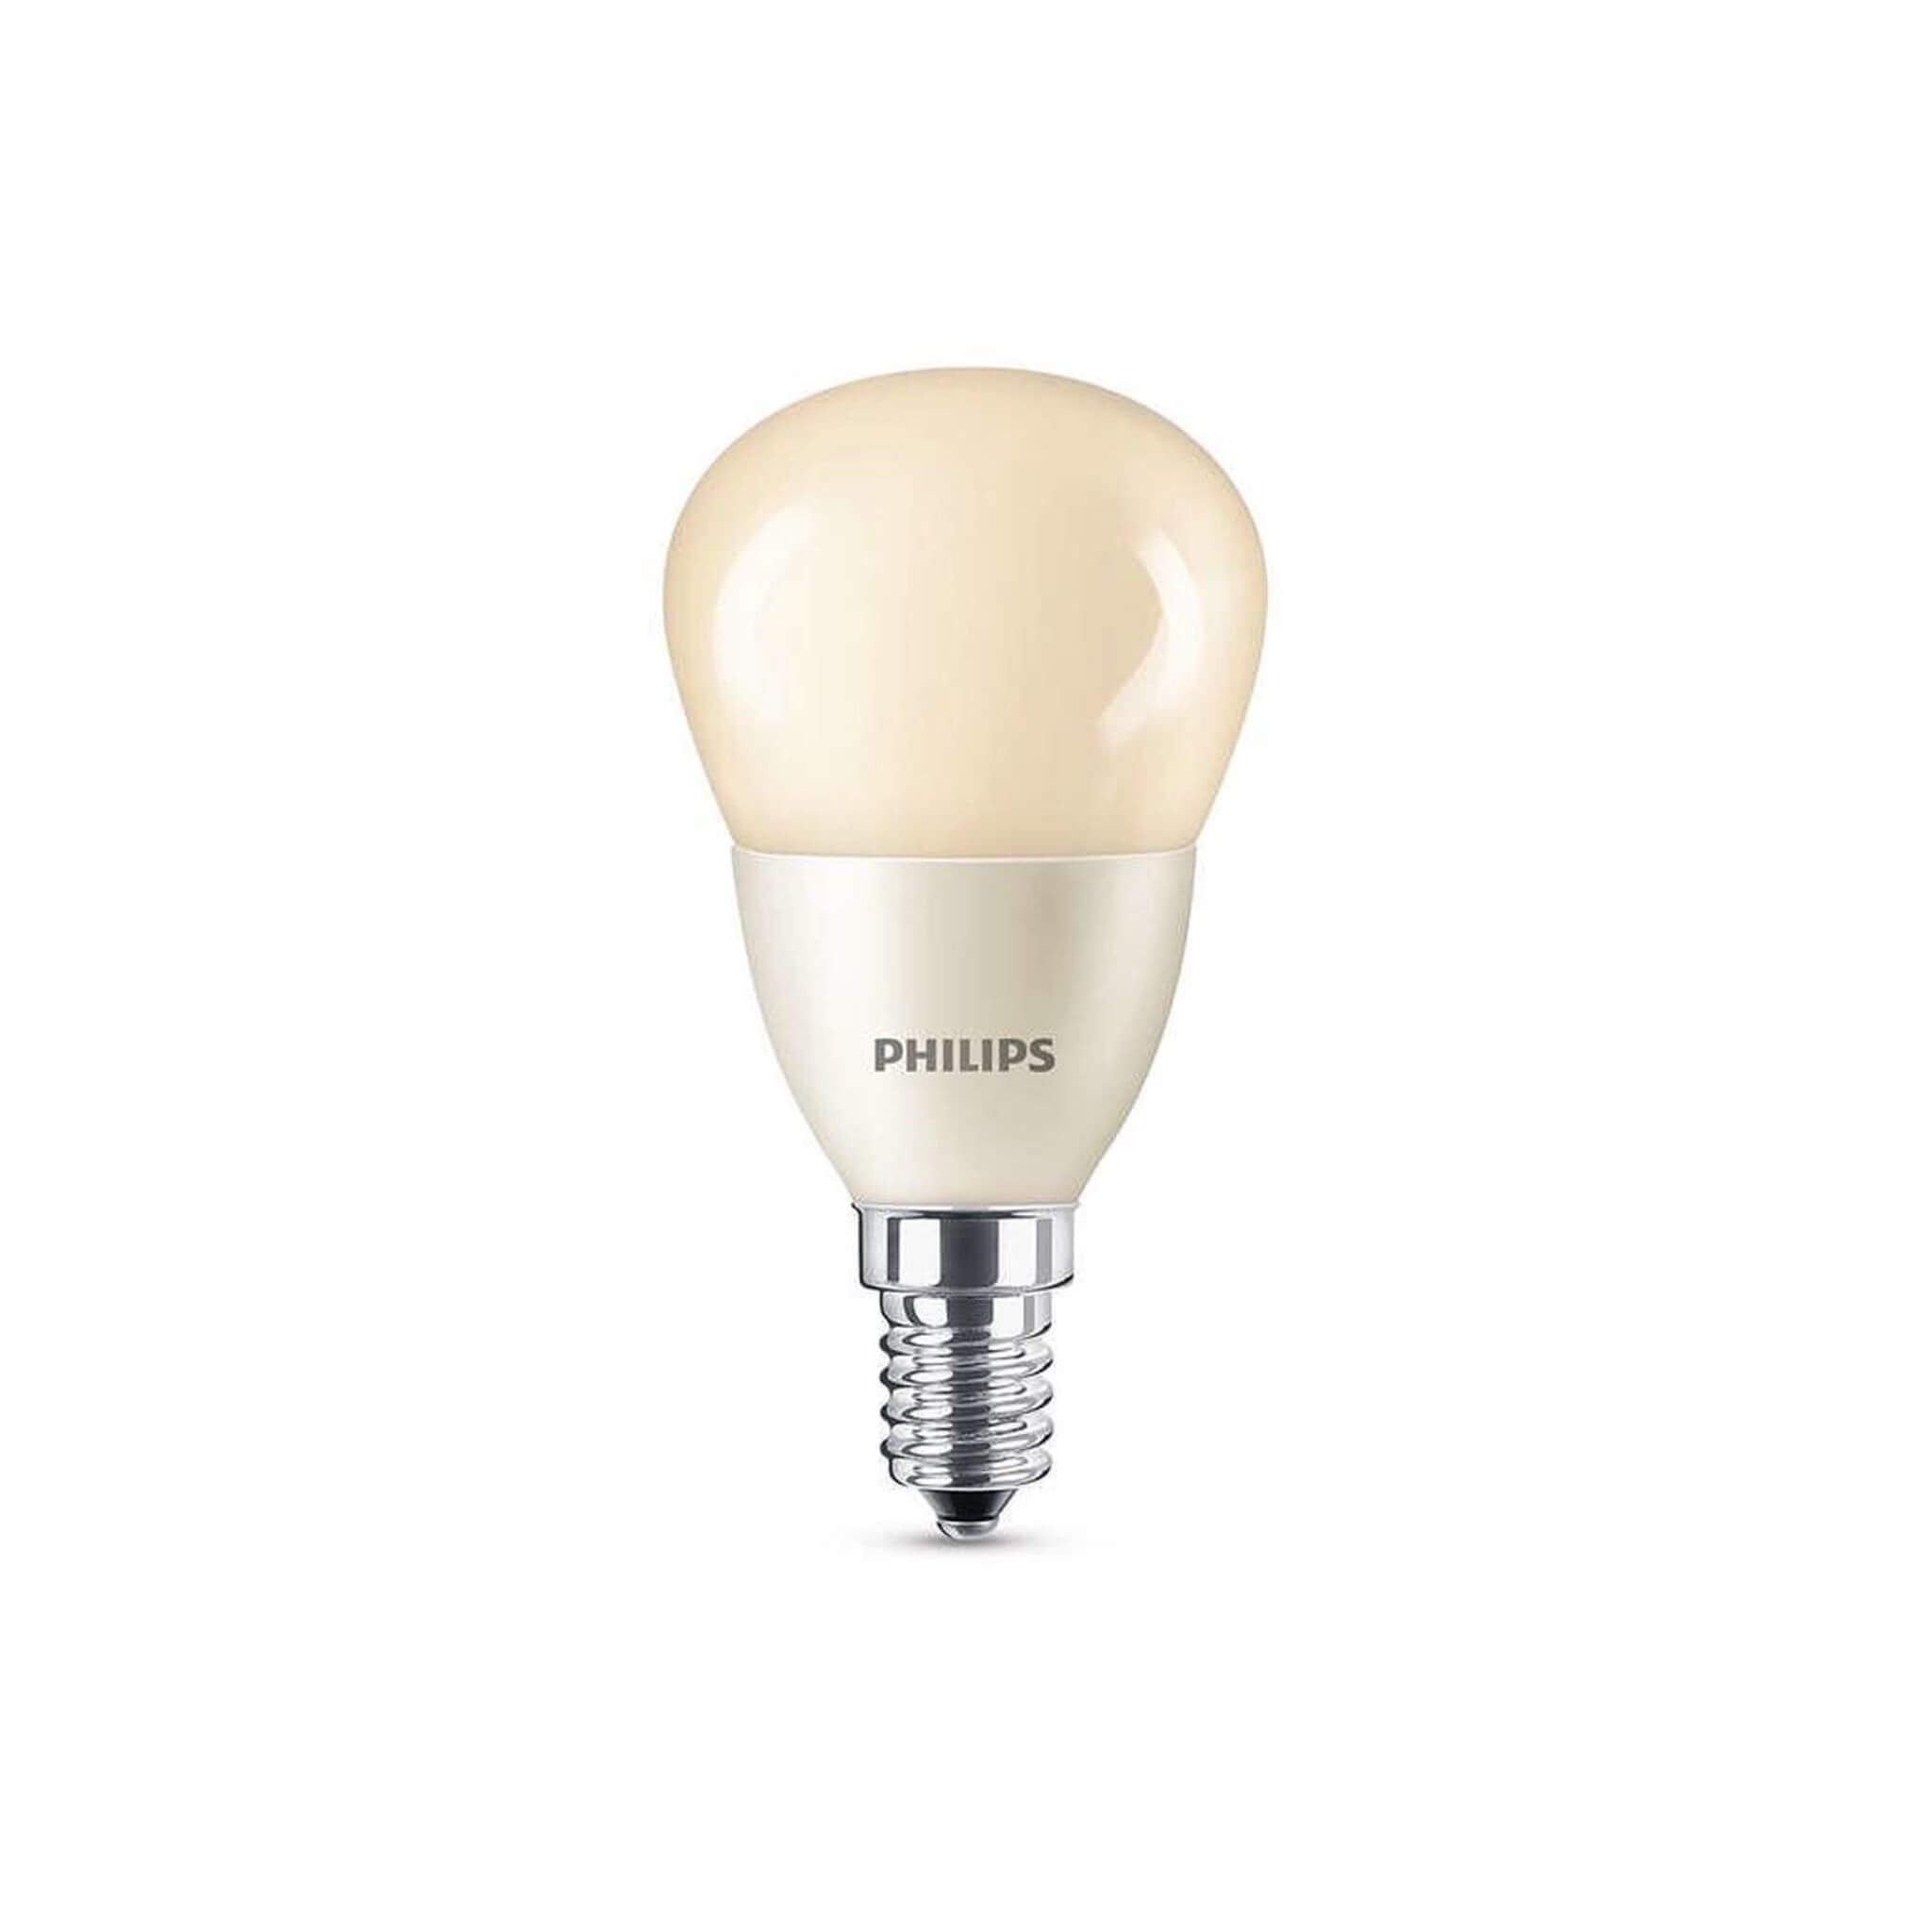 Dag heelal datum Philips LED Lamp Flame - E14 fitting - Dimbaar warm wit licht - 4W (15 –  LED.nl